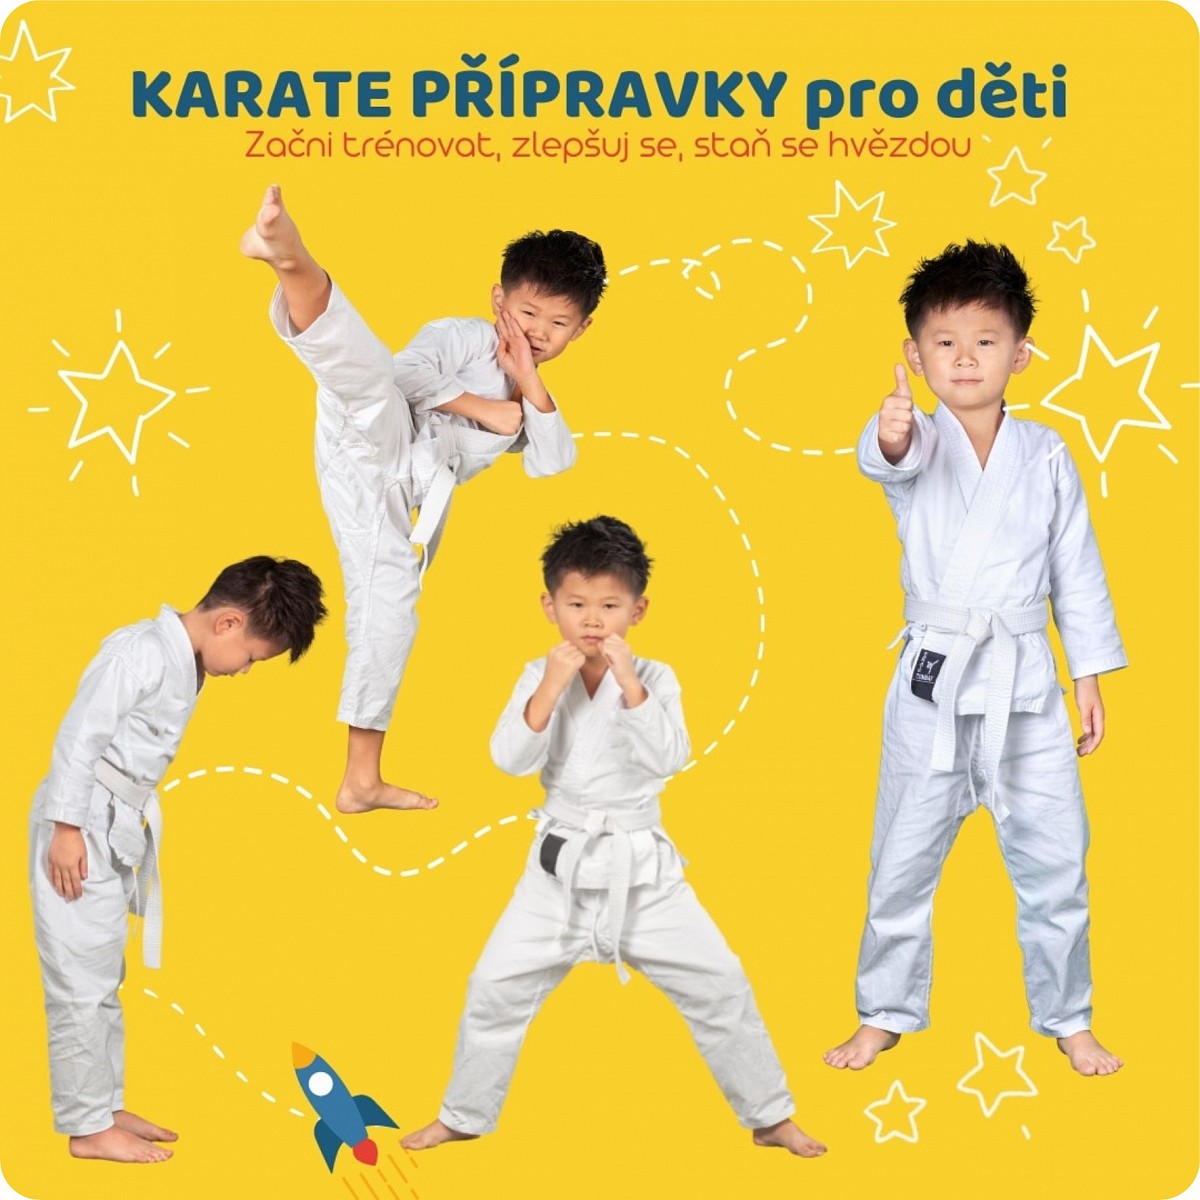 kkk-karatedeti-2022.jpg